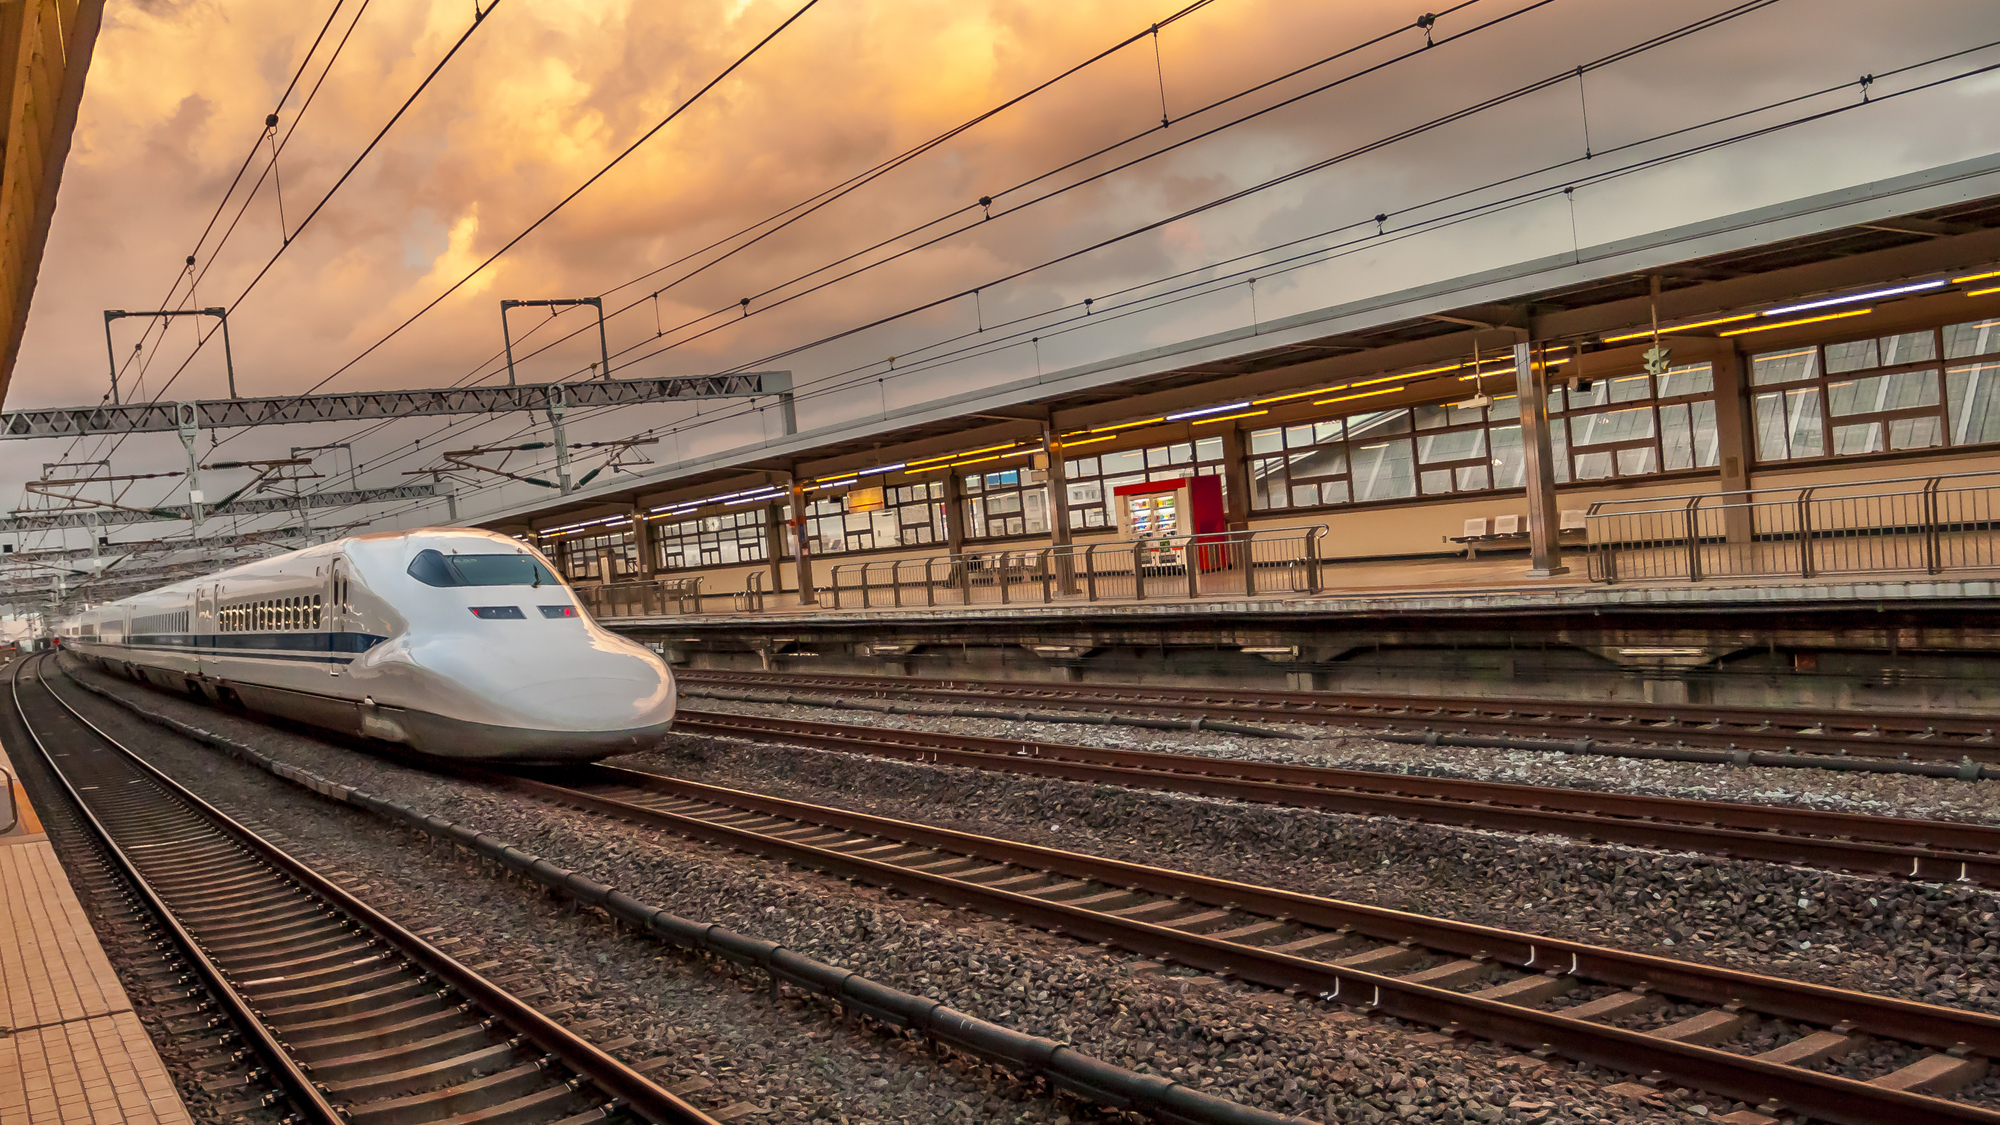 Japanese bullet train leaving station at dawn